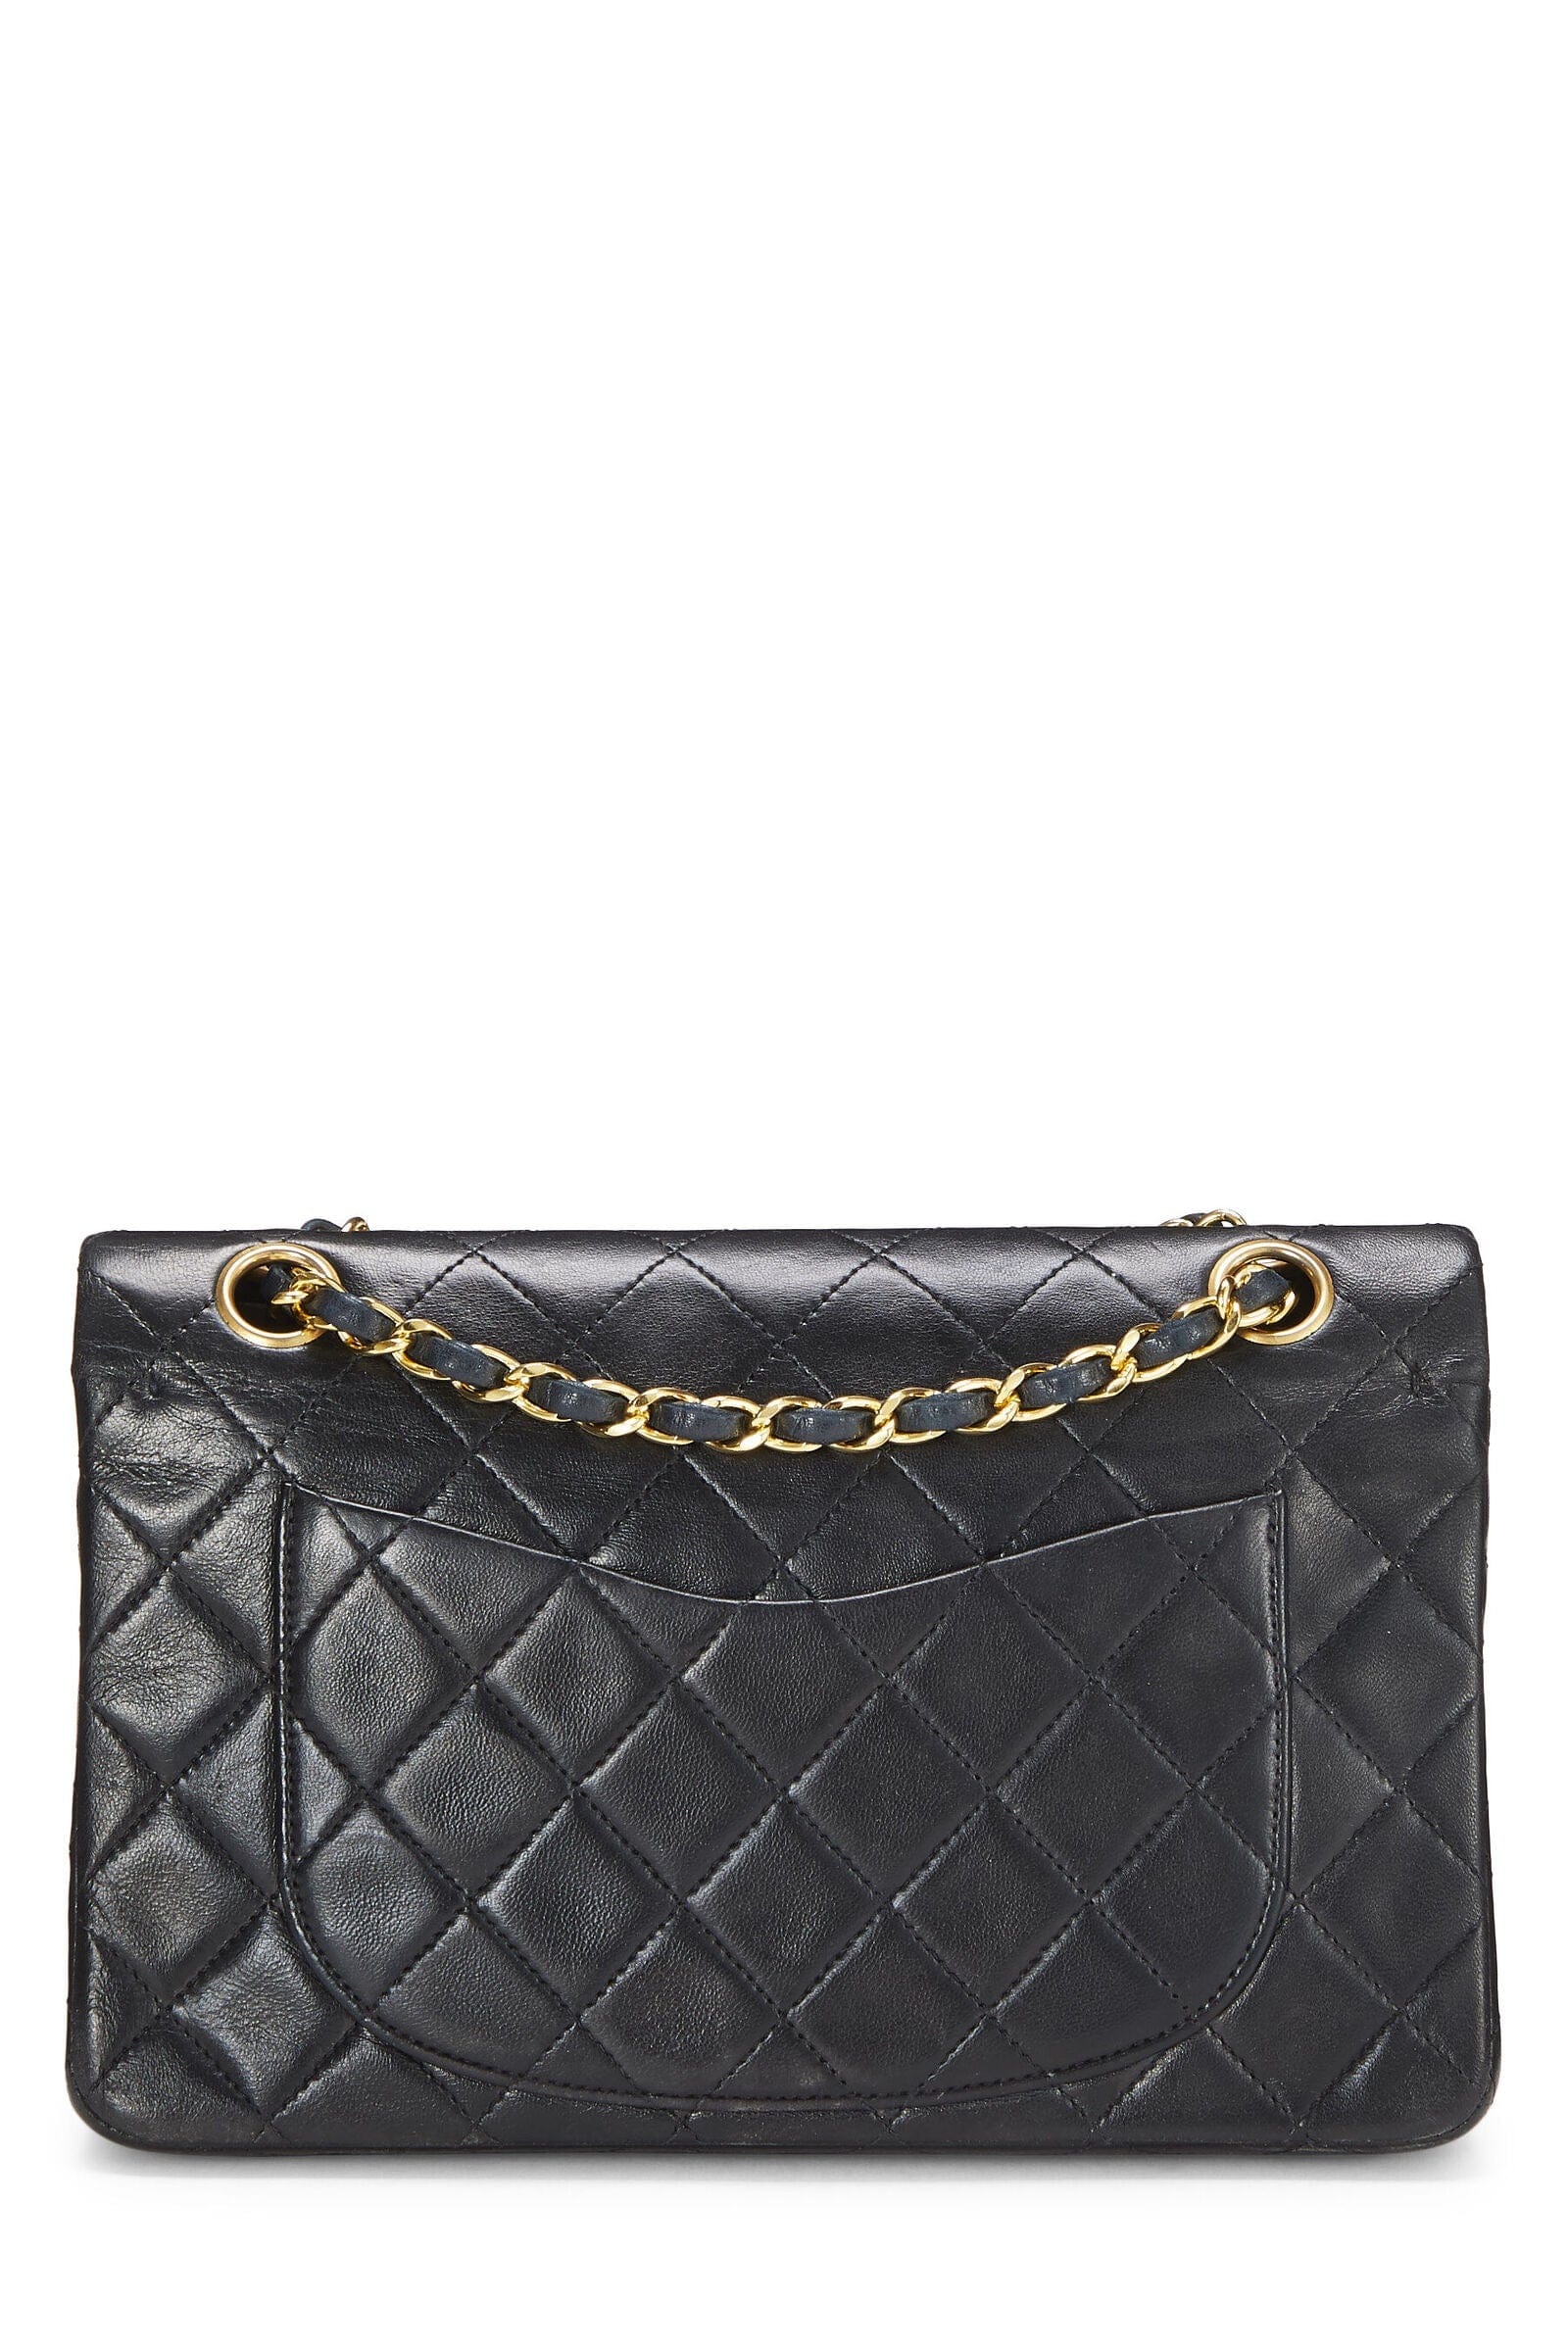 Chanel Chanel Black Lambskin 2.55 9" Q6B0101IK1766